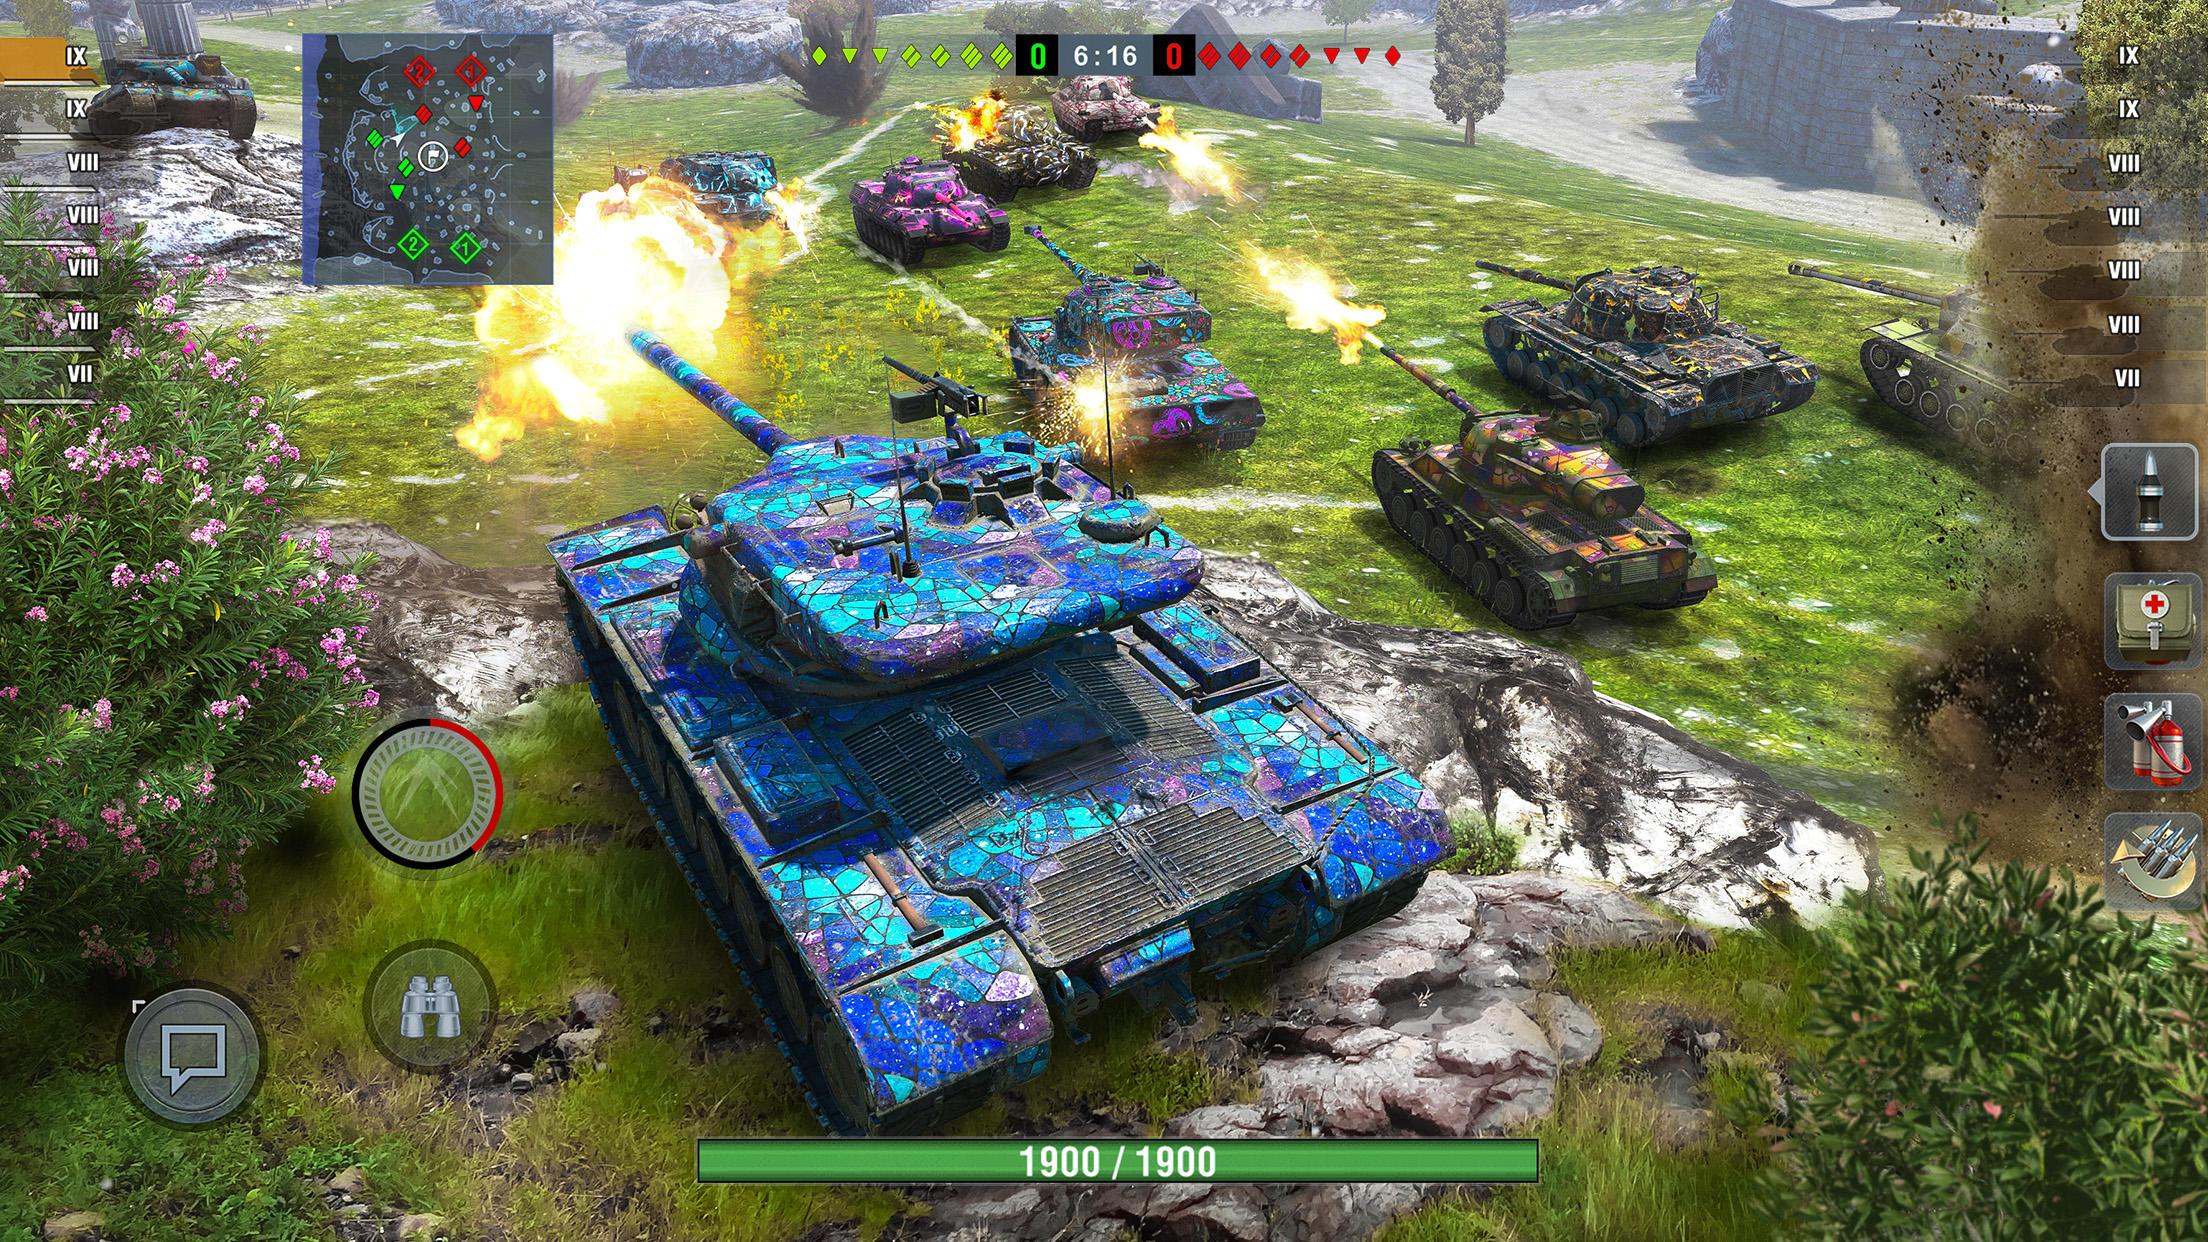 Screenshot 1 of World of Tanks Blitz 10.8.0.438